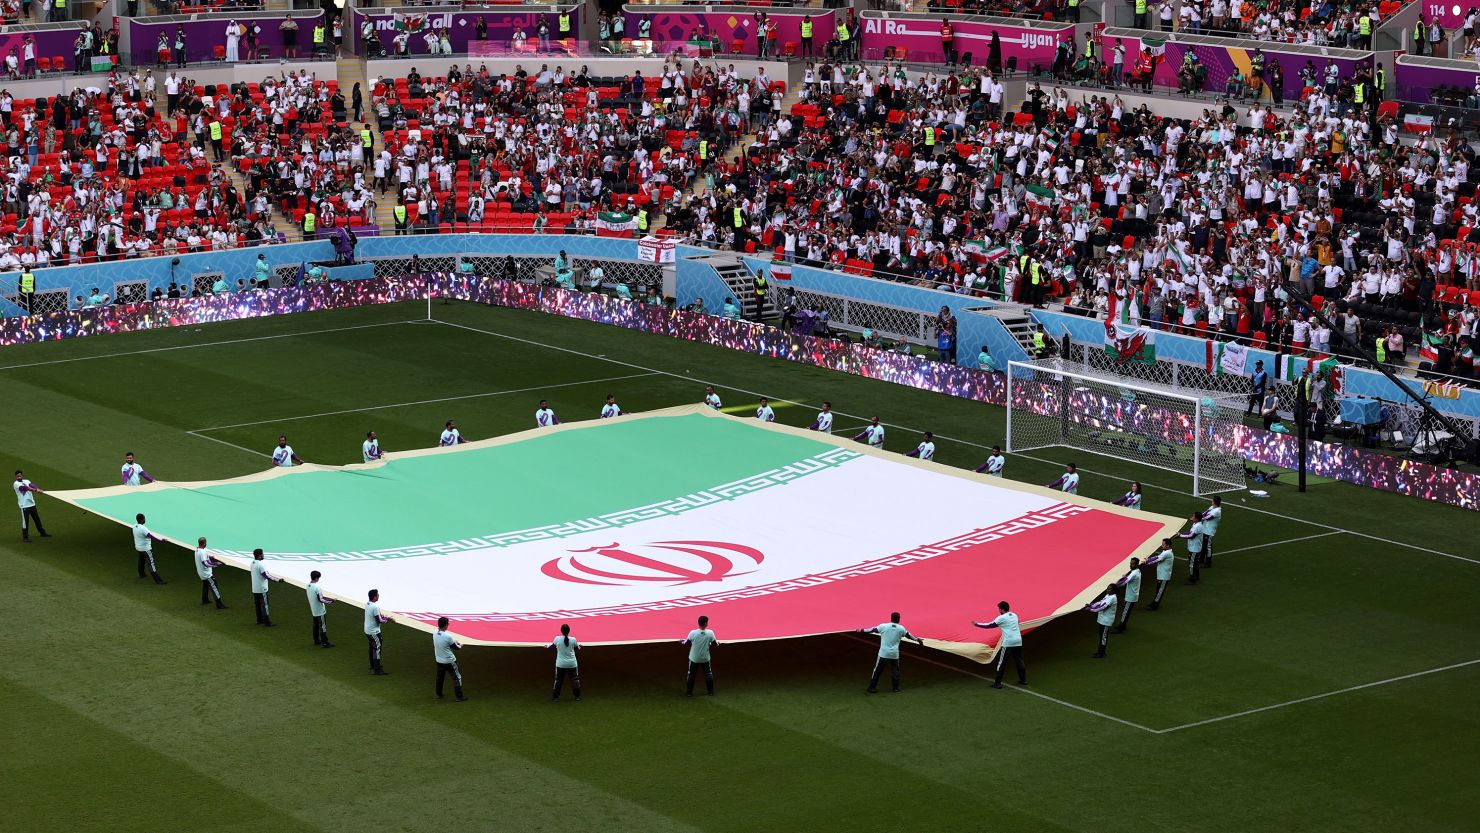 https://media.cnn.com/api/v1/images/stellar/prod/221127112511-iran-flag-world-cup-1125.jpg?c=16x9&q=h_833,w_1480,c_fill